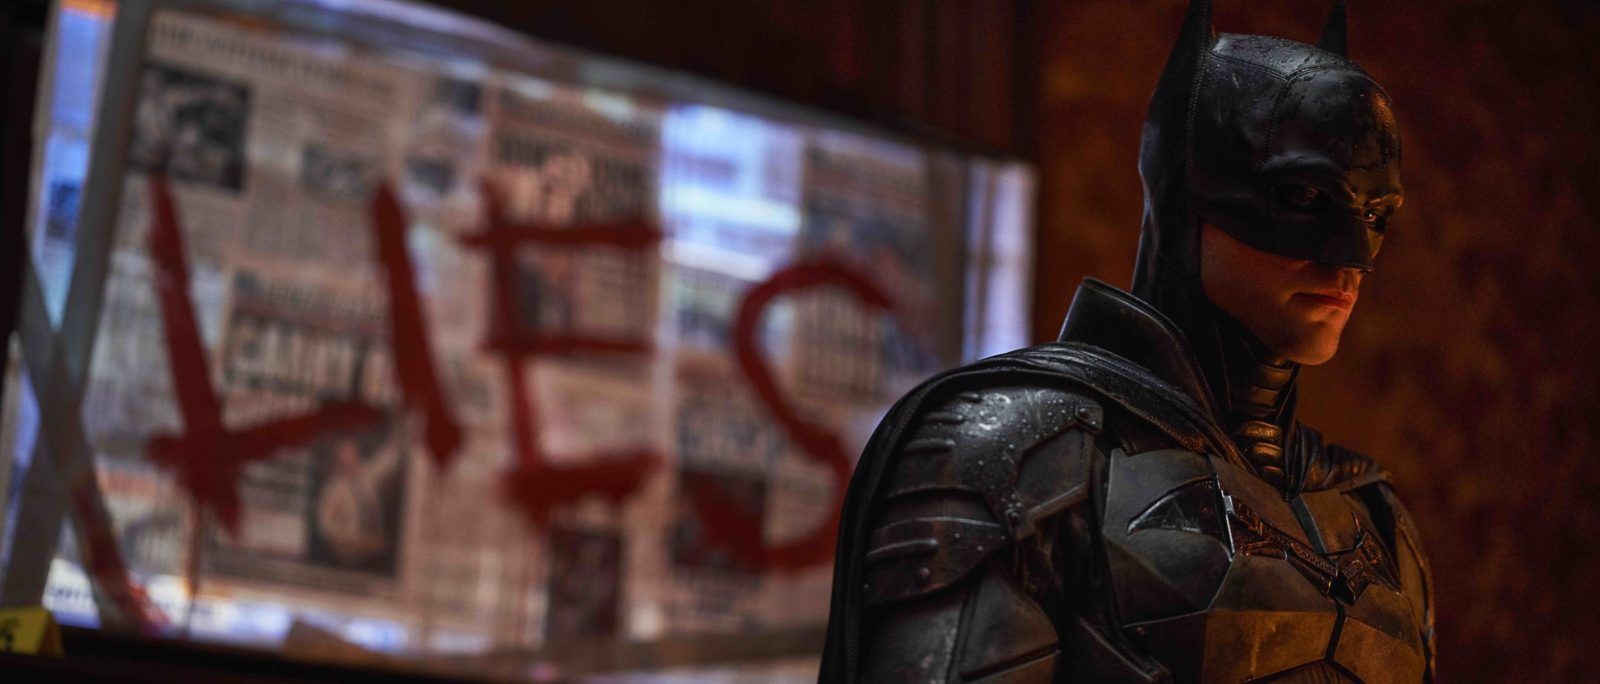 The Batman 2 officially announced: Robert Pattinson and Matt Reeves returning